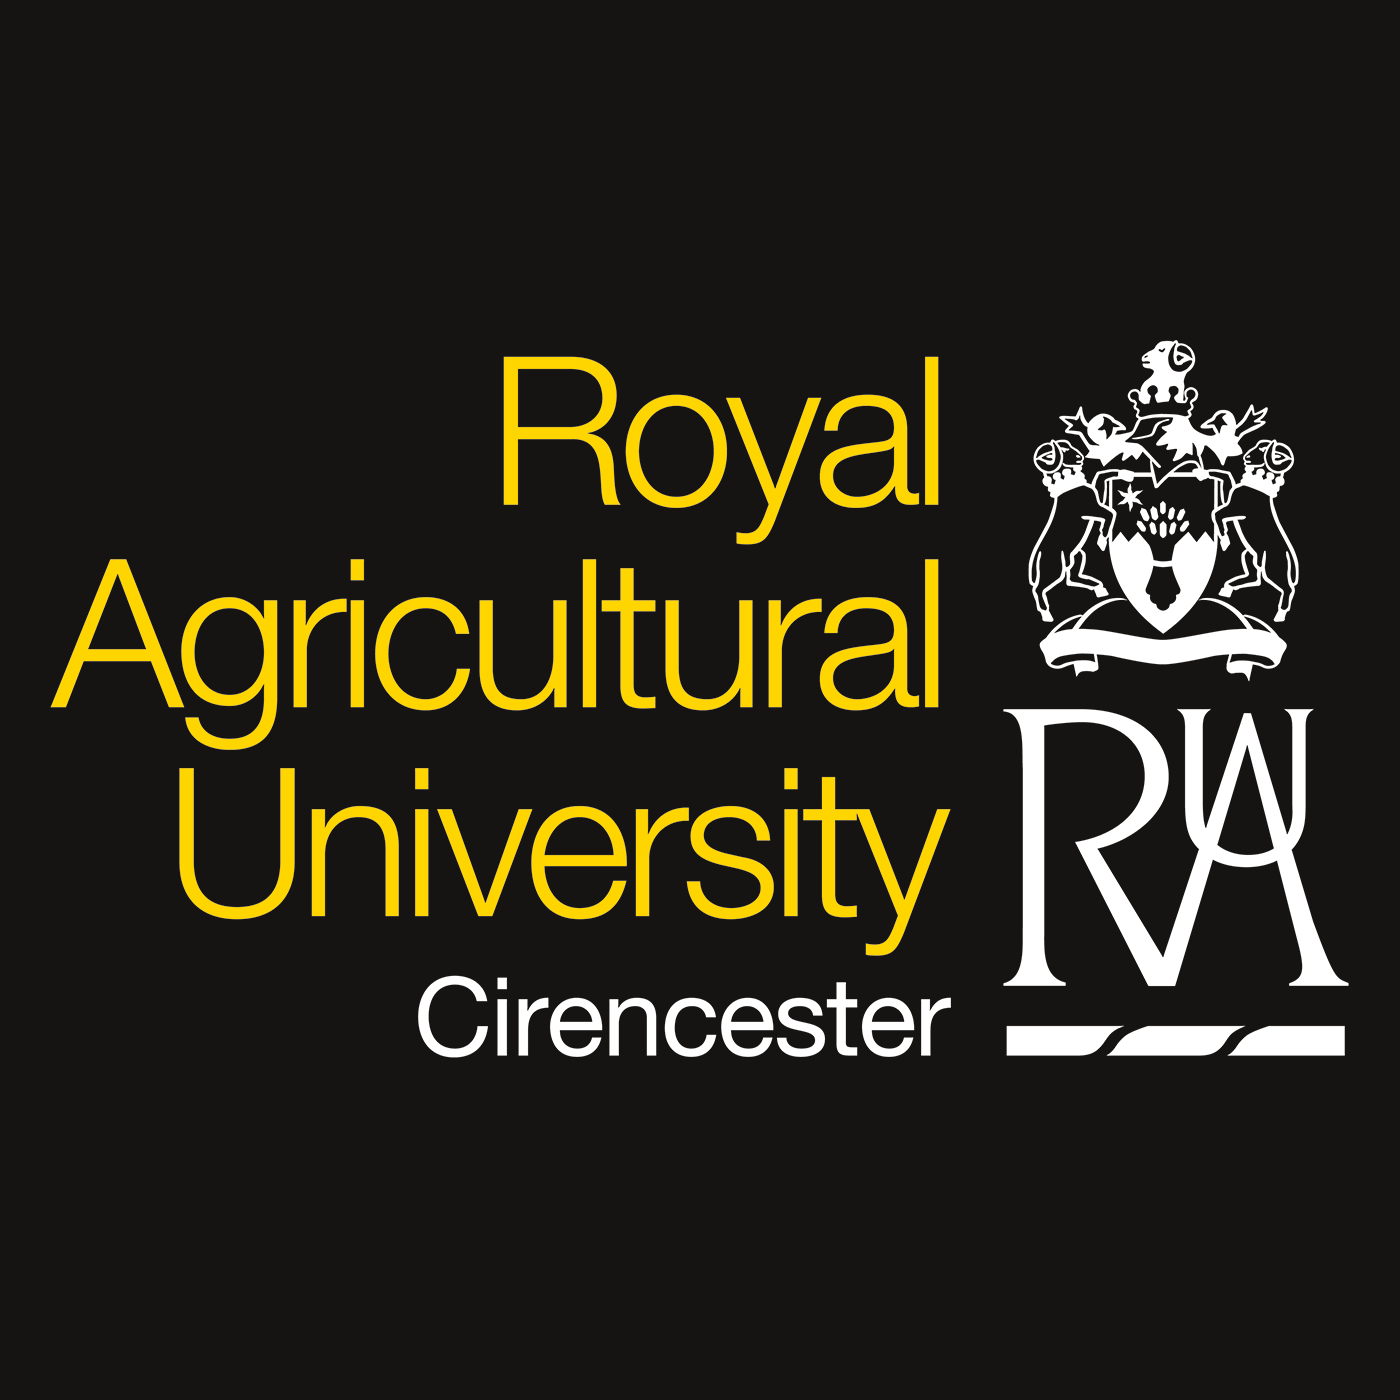 Royal agricultural university jobs